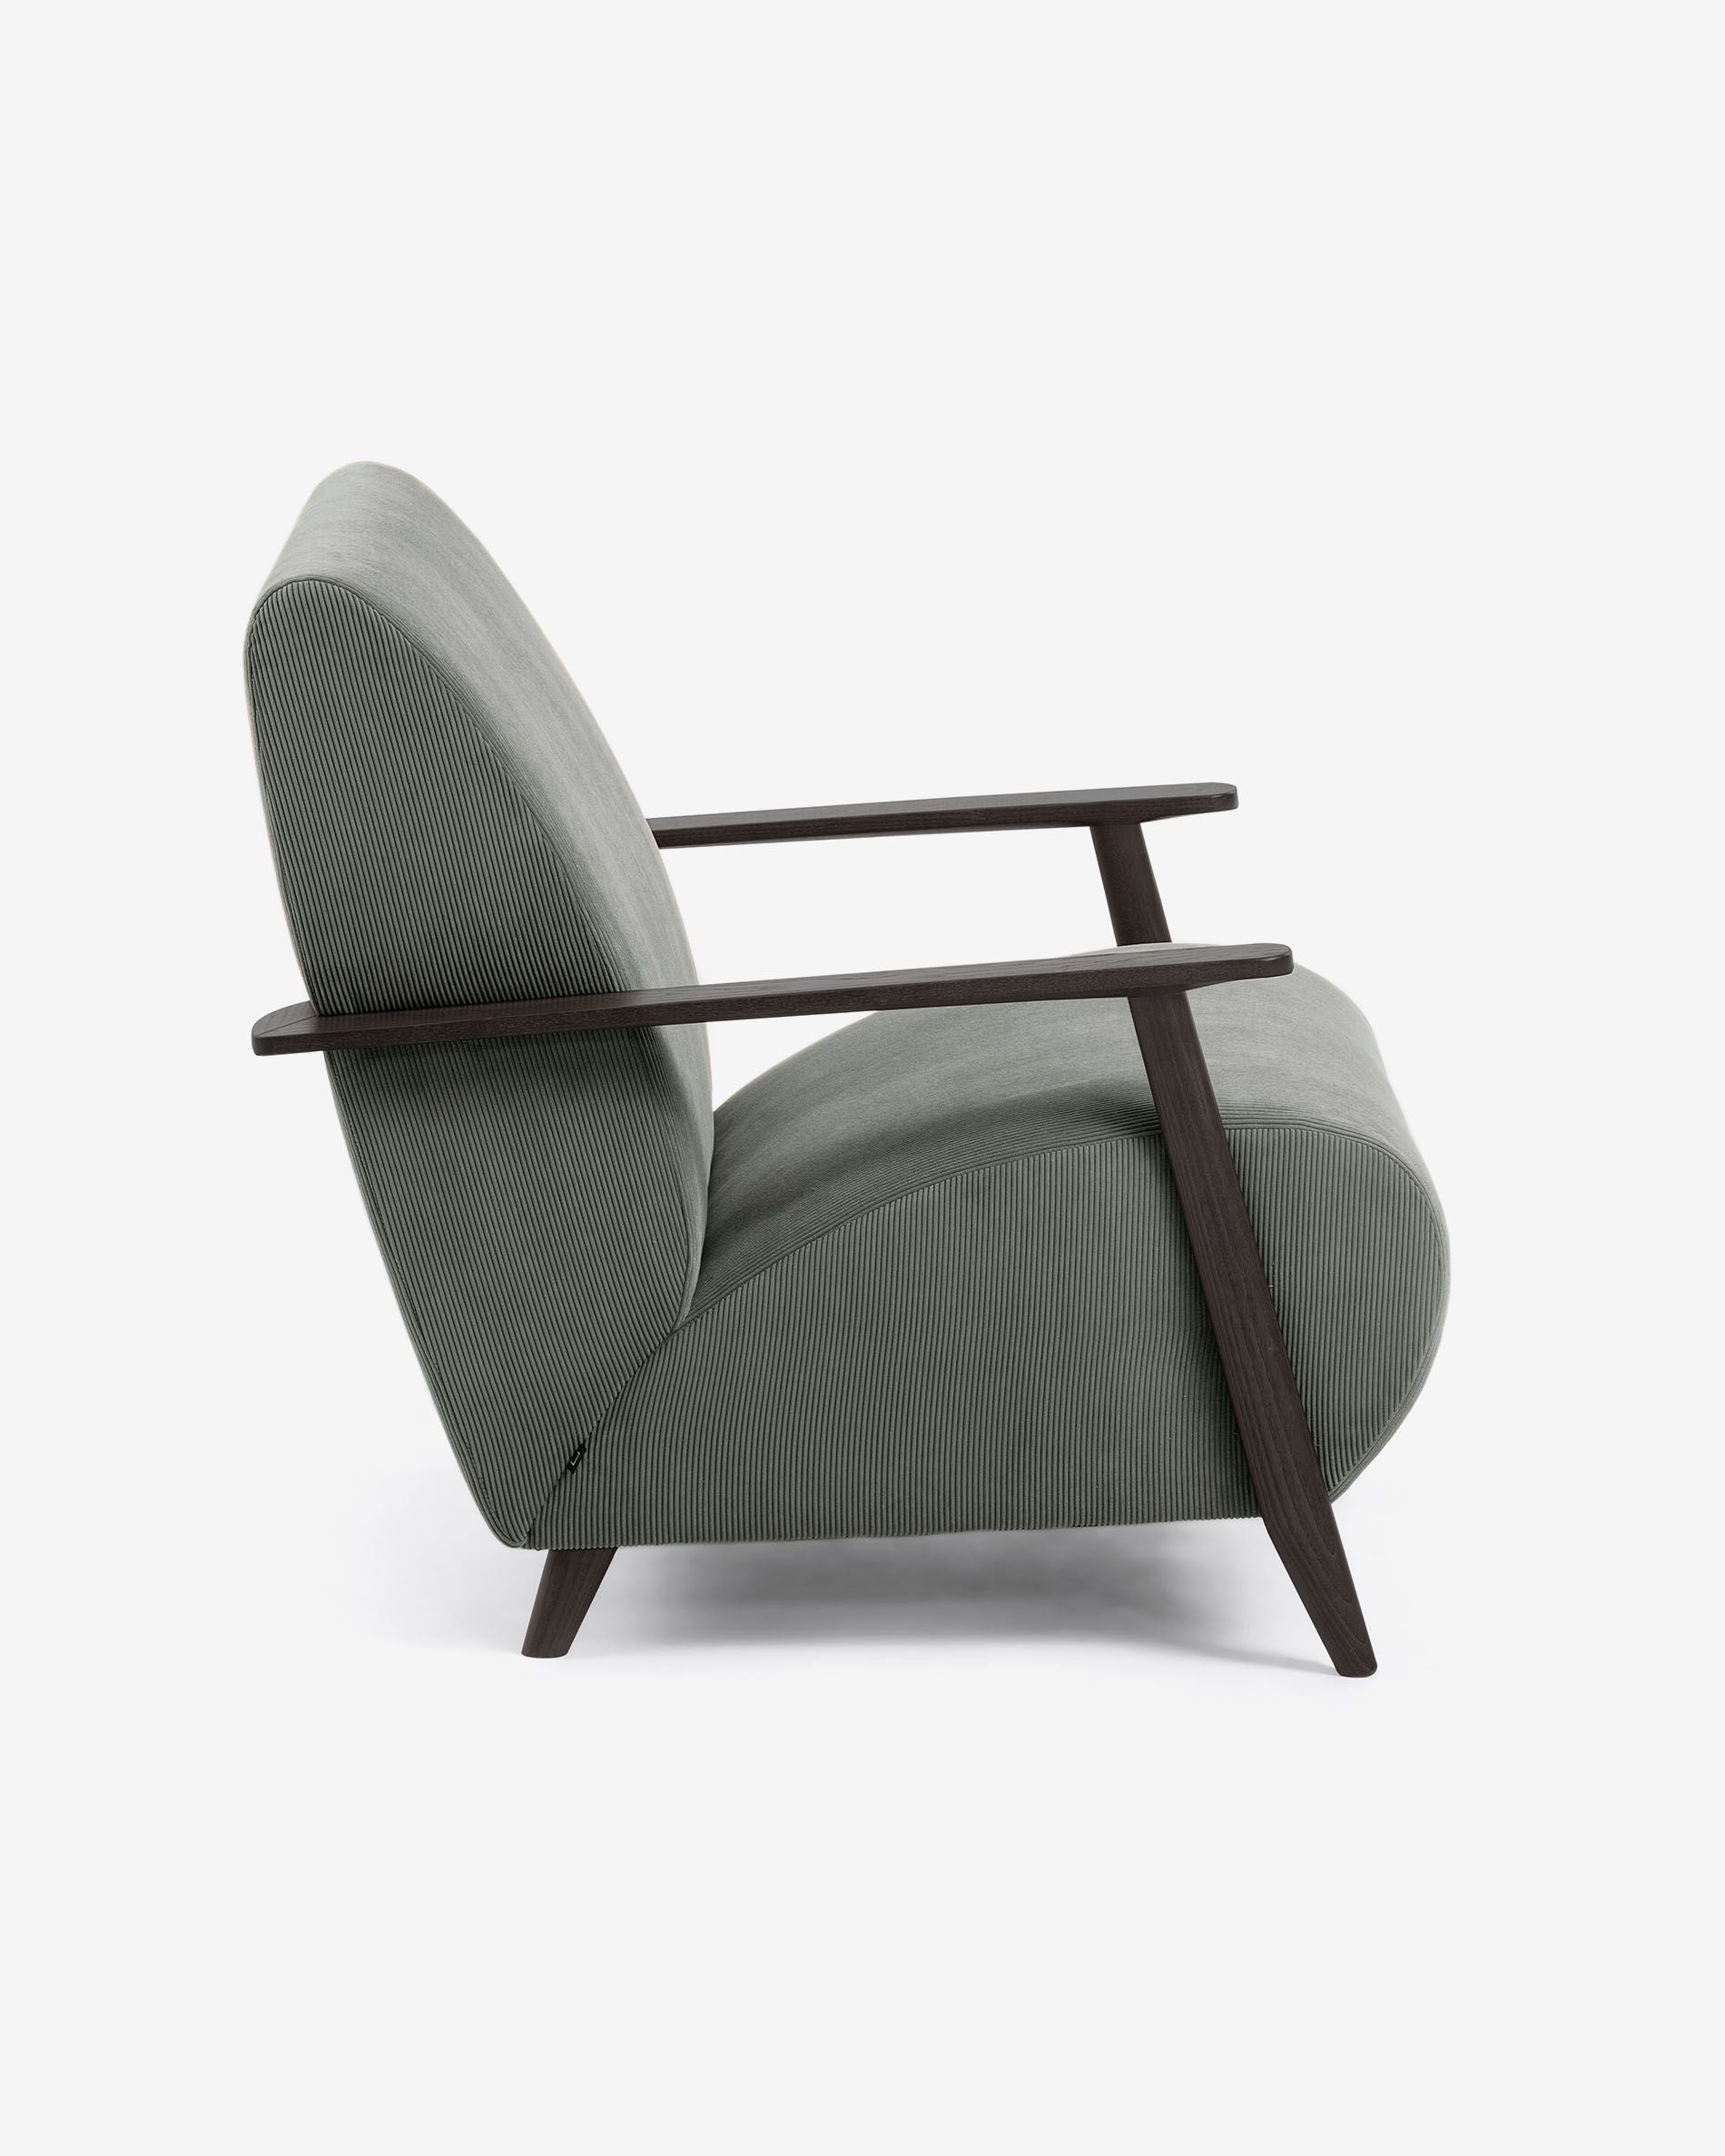 Kave Home Sessel Meghan - SKU #S517PN15 in Farbe Grau - Beine in Dunkelbraun - Seite